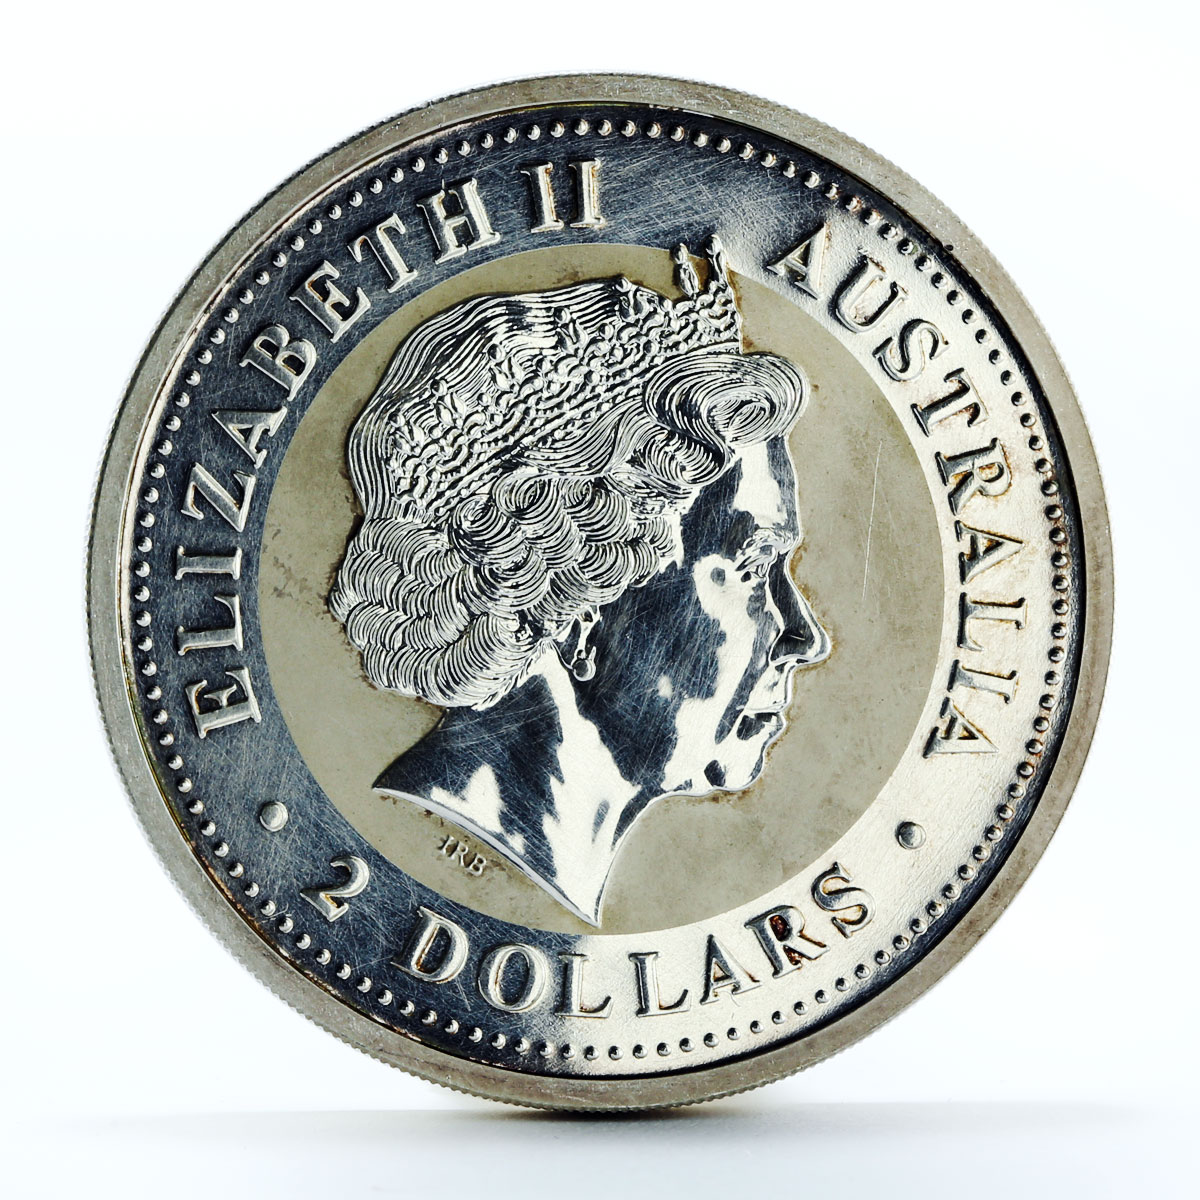 Australia 2 dollars Year of the Goat Lunar Series I 2 oz silver coin 2003